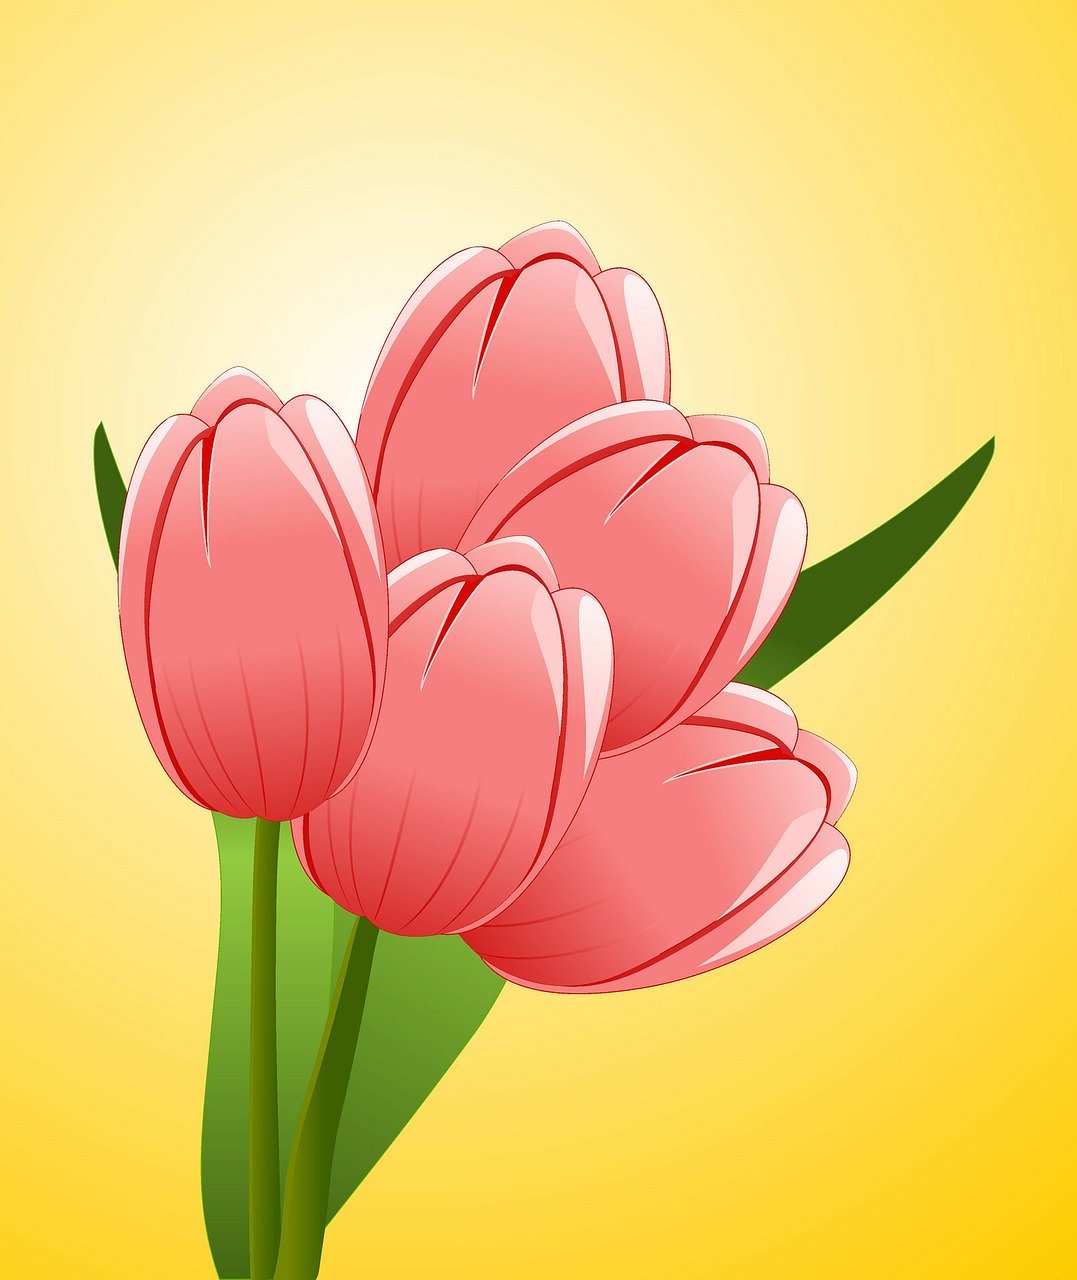 15+ Gambar Bunga Tulip Indah - Servergambar01